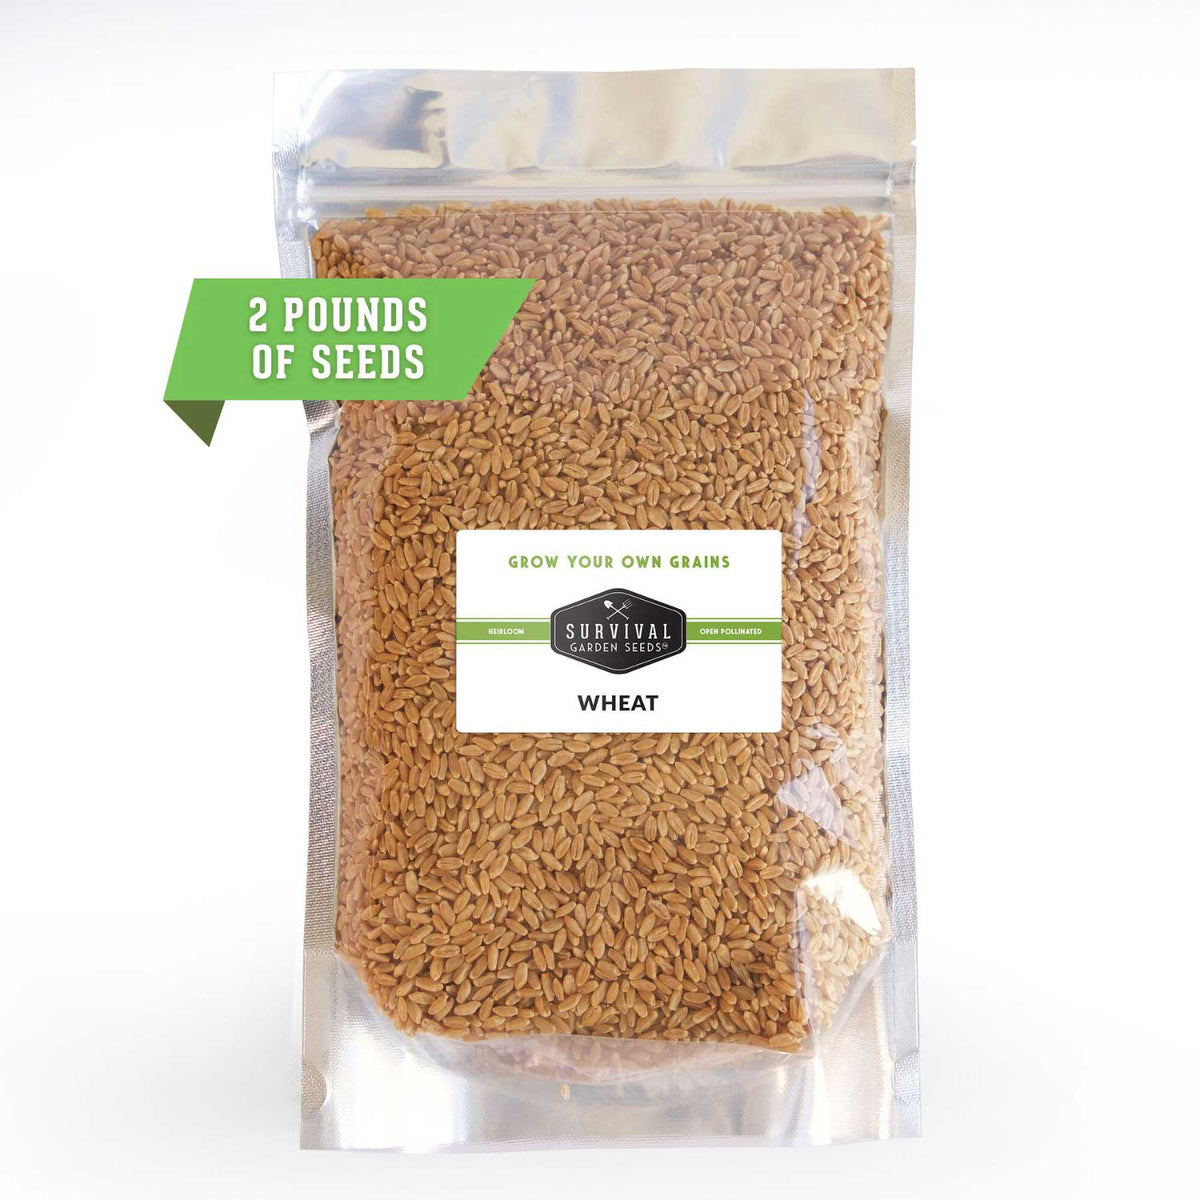 2lbs of bulk wheat seeds